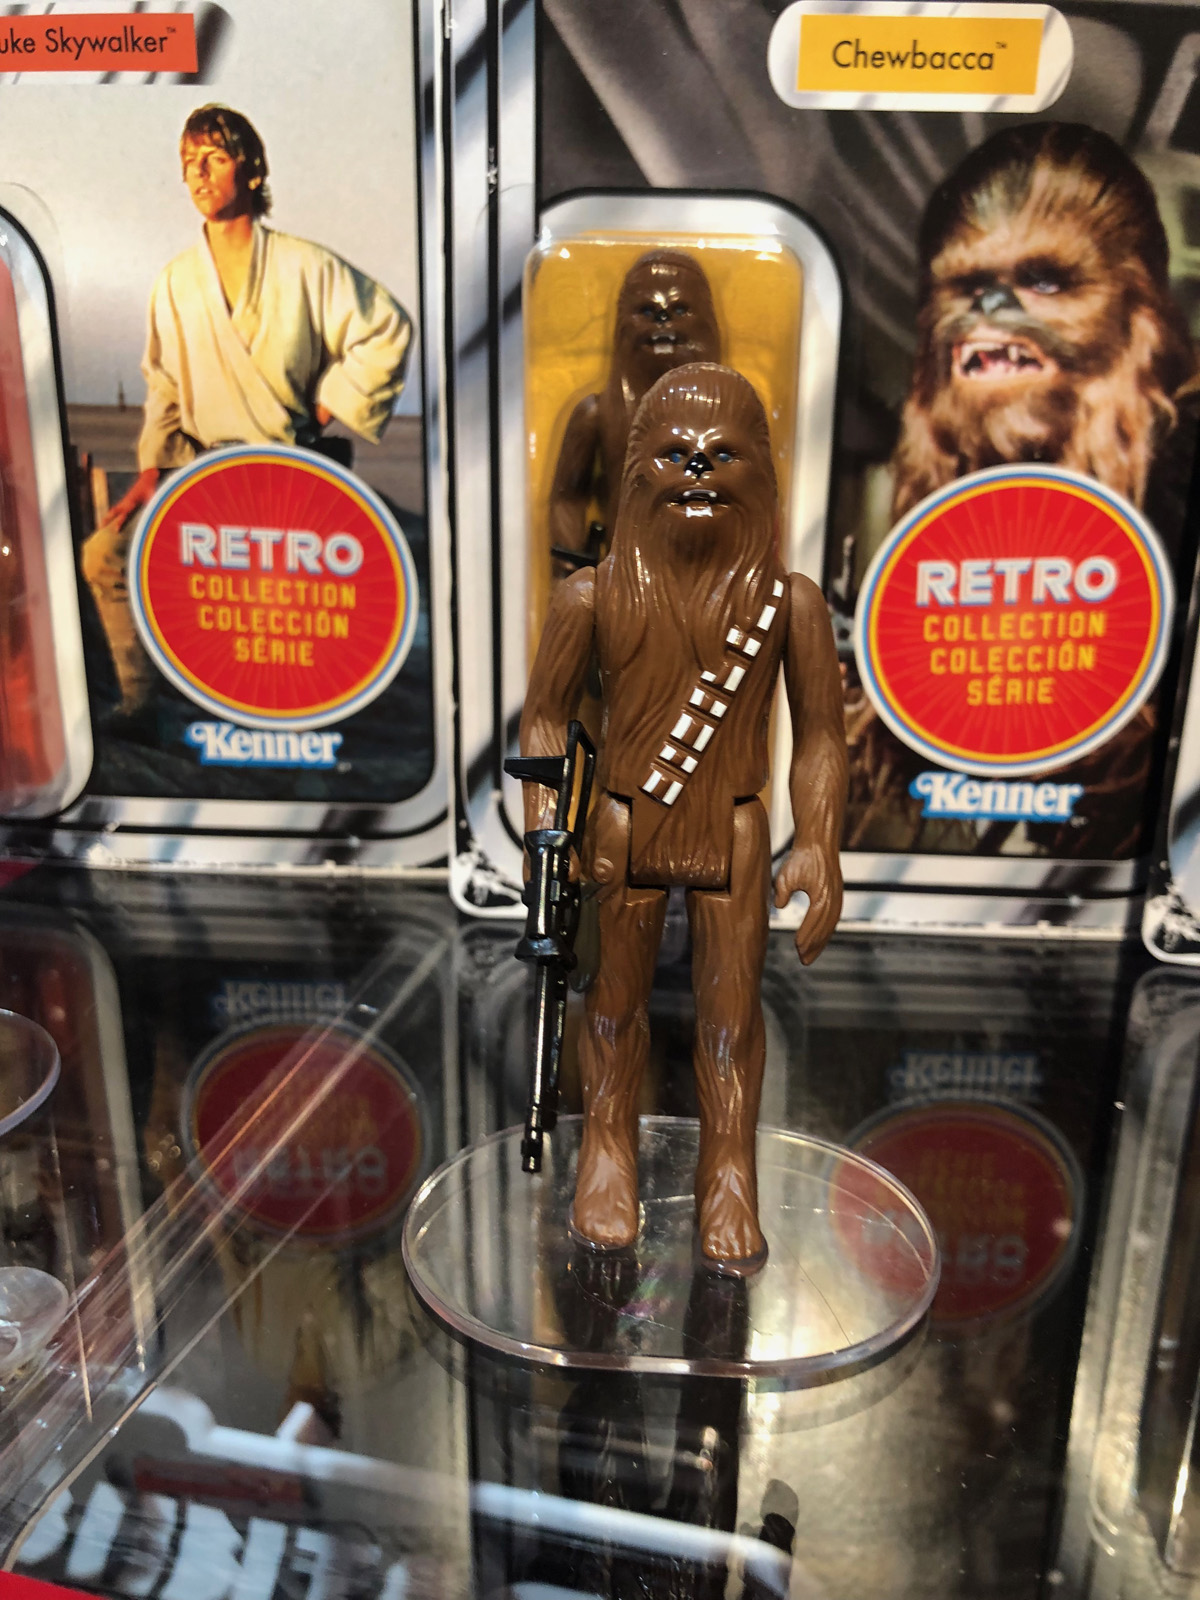 Star Wars Hasbro Toy Fair 2019